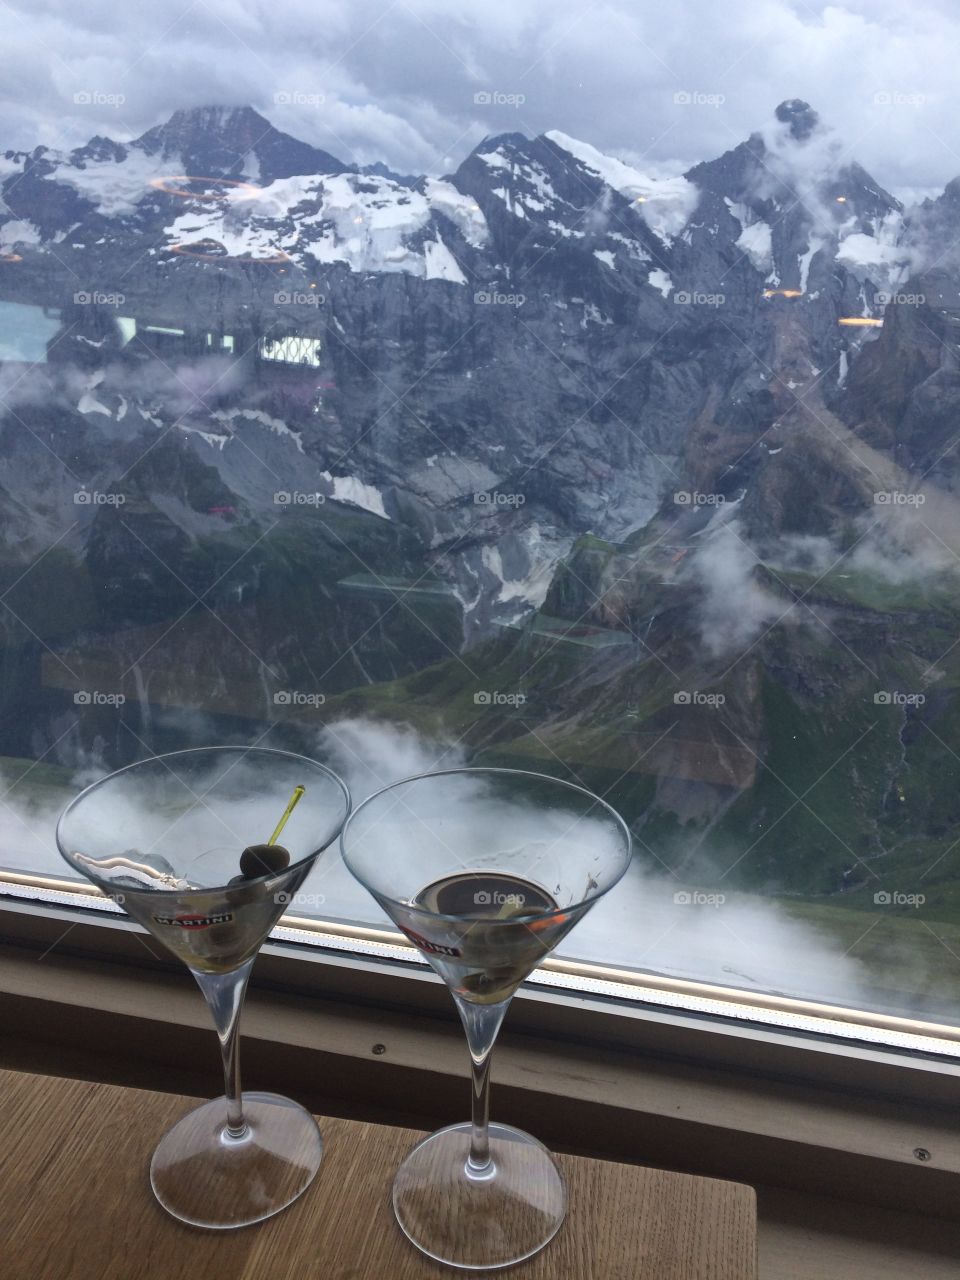 James Bond 007 mountain restaurant cocktails